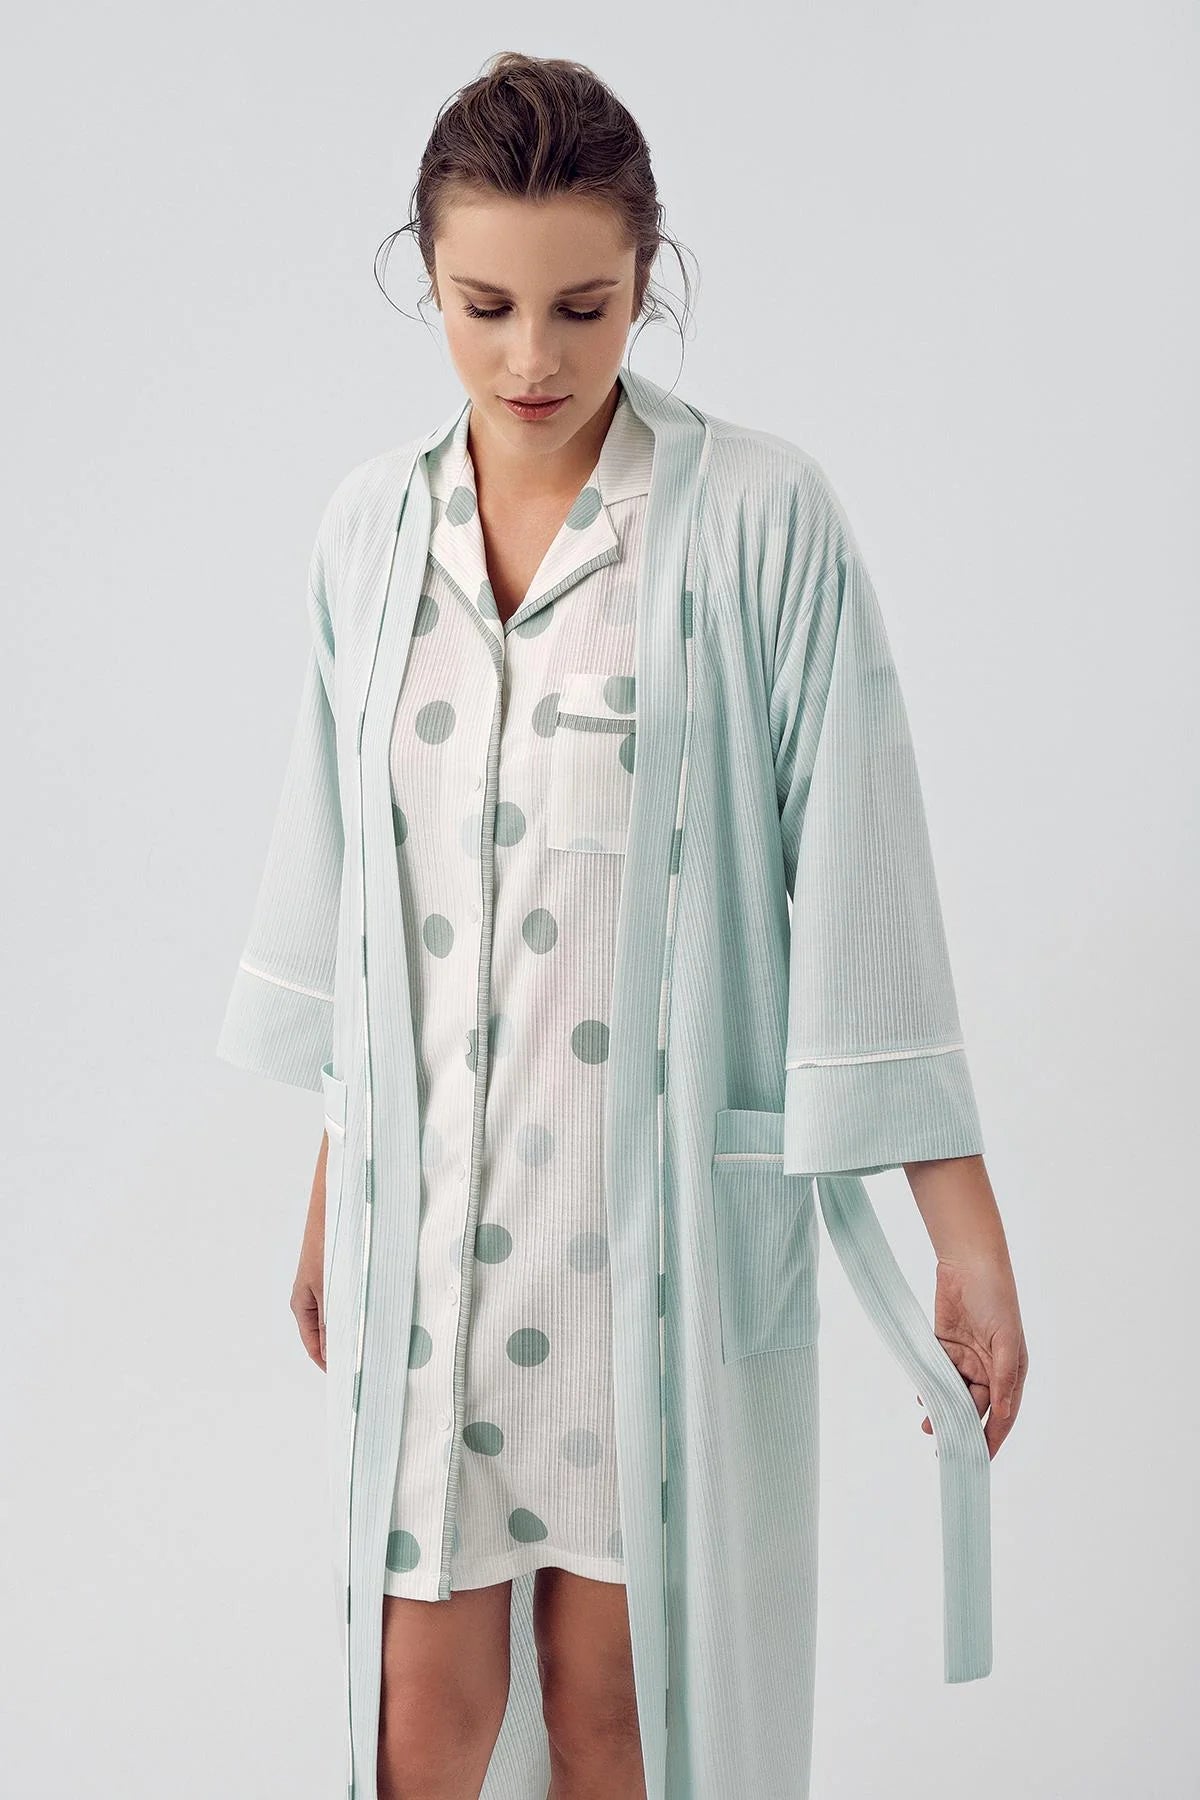 Shopymommy 16410 Polka Dot Maternity & Nursing Nightgown With Robe Green